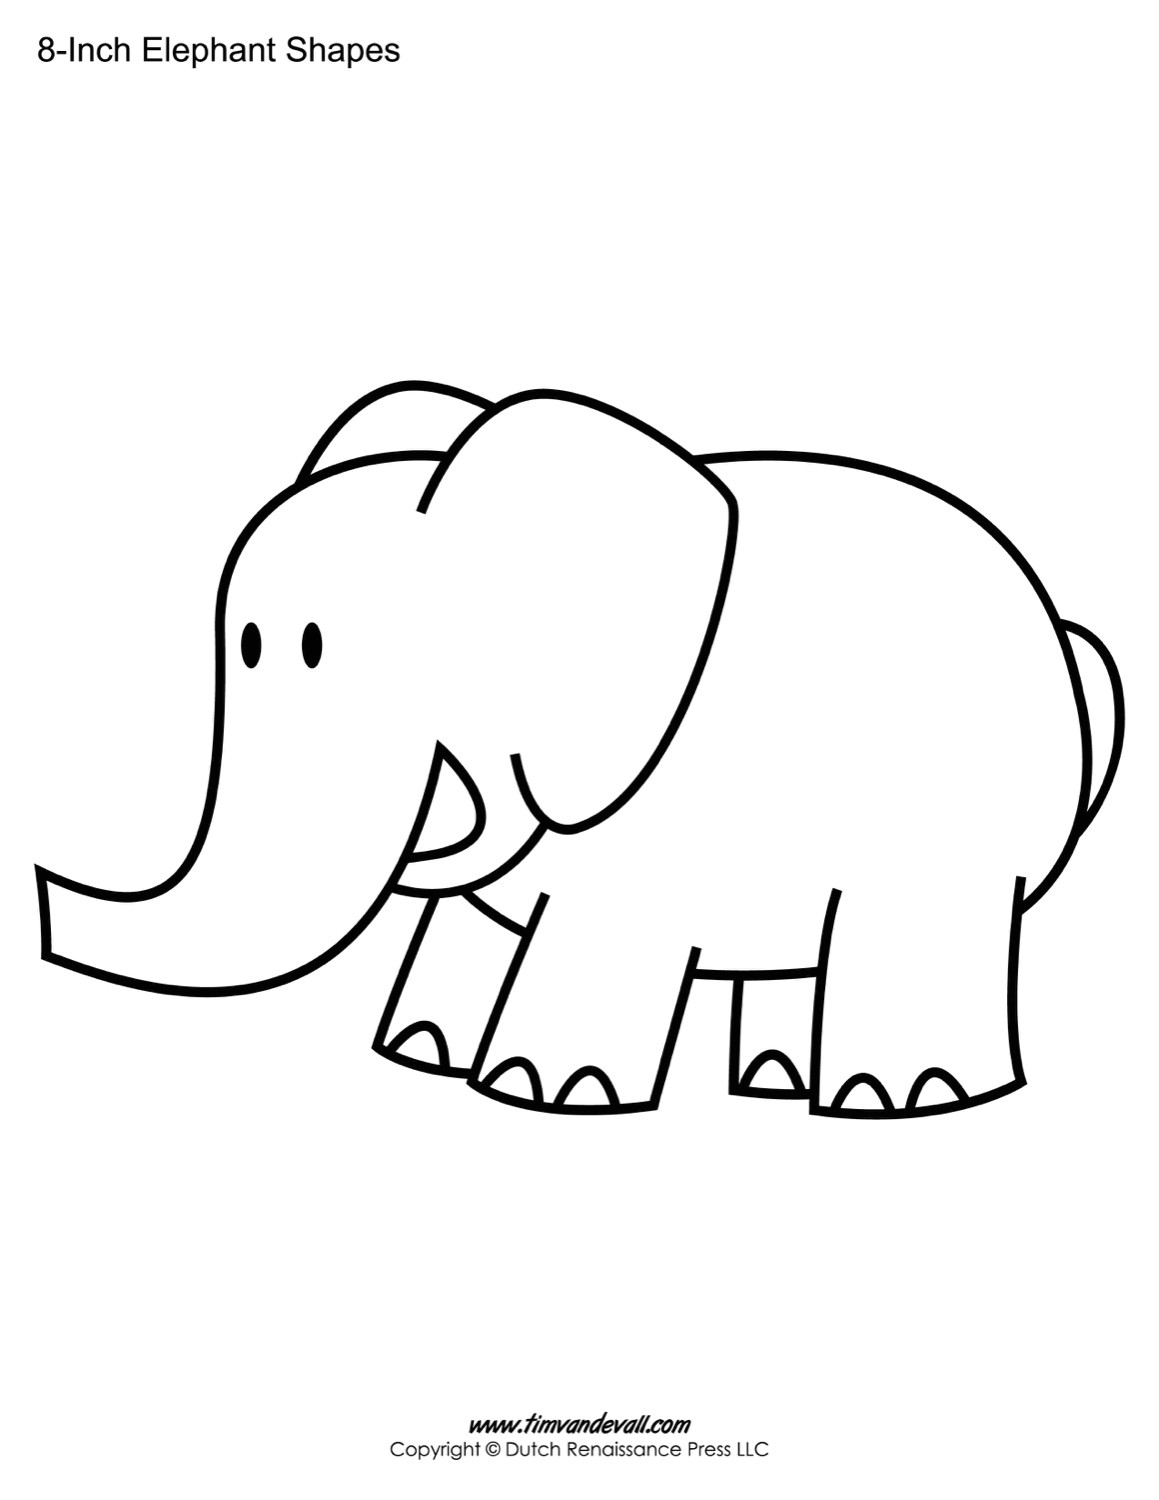 cut out elephant pattern shtml